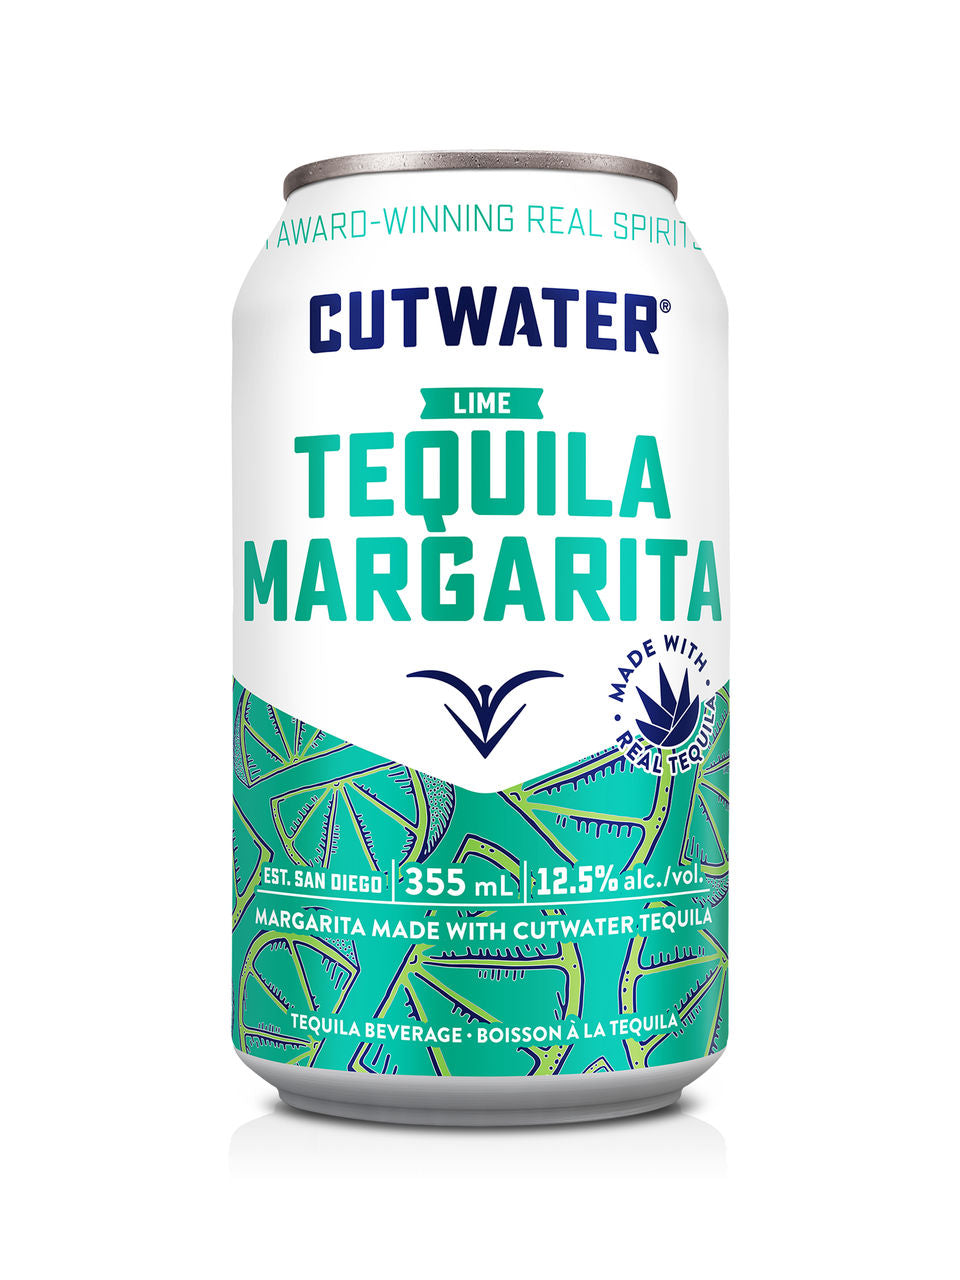 Cutwater Tequila Margarita 355 ml can